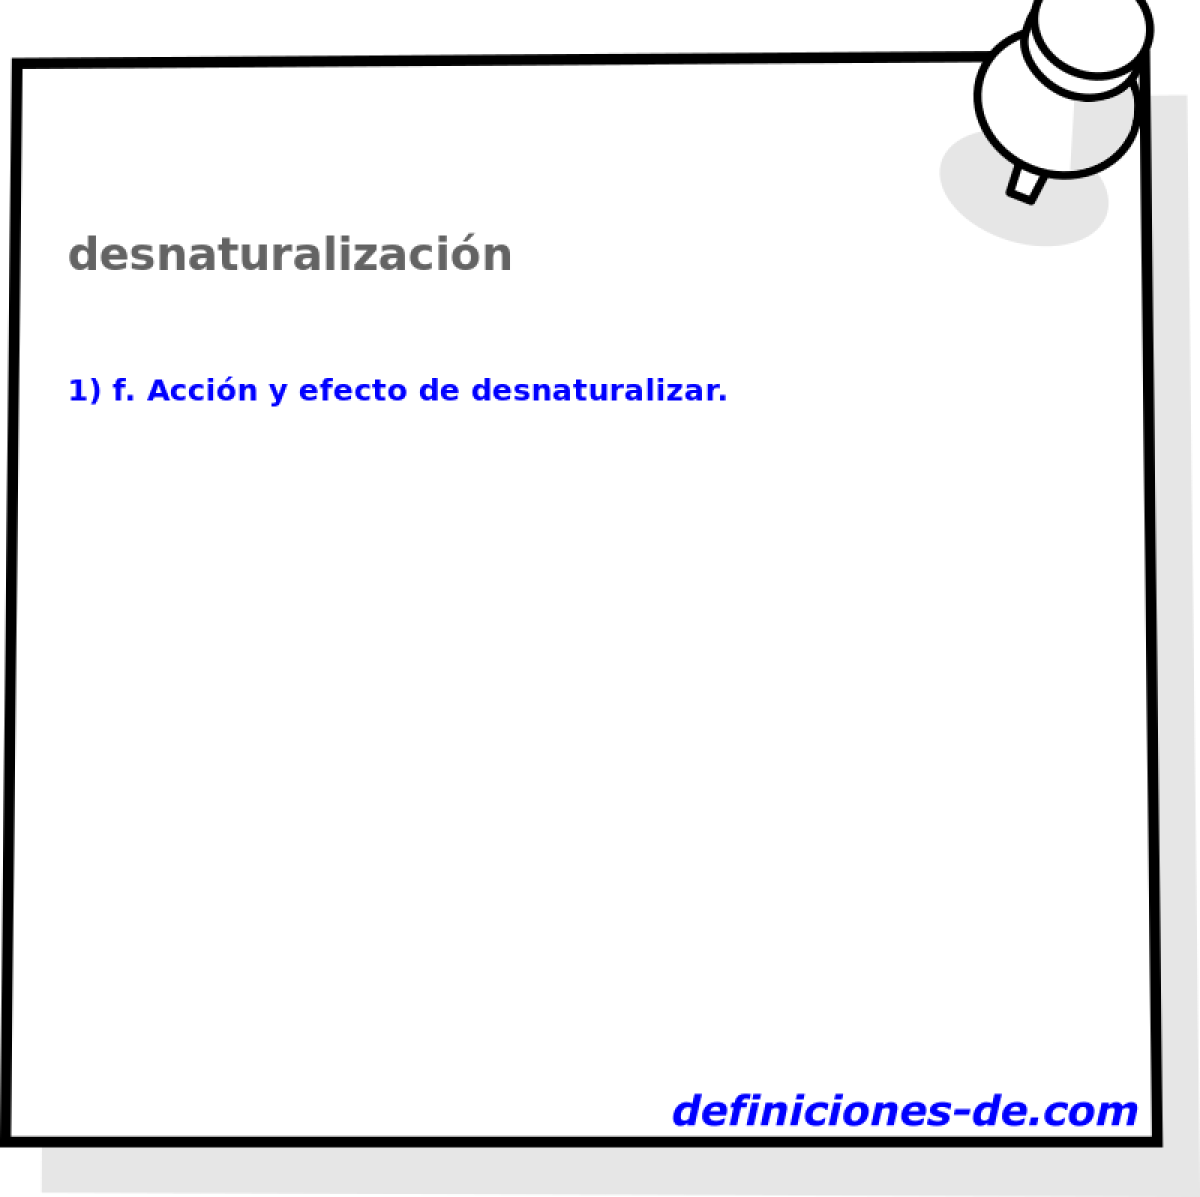 desnaturalizacin 